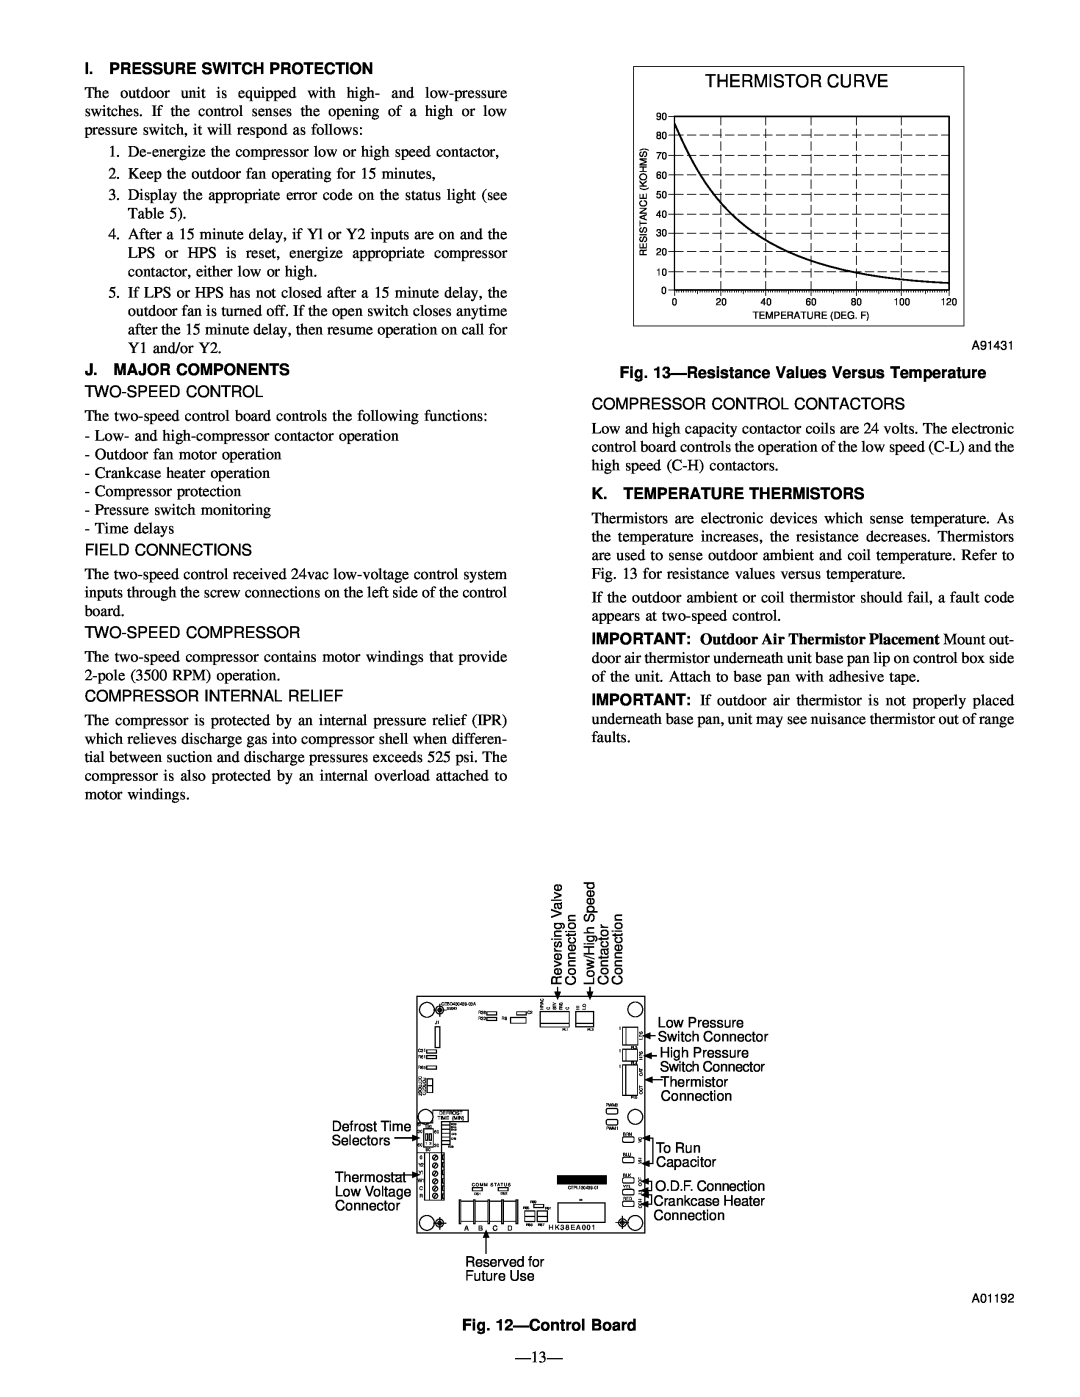 Bryant 598B Thermistor Curve, I. Pressure Switch Protection, J. Major Components, Resistance Values Versus Temperature 